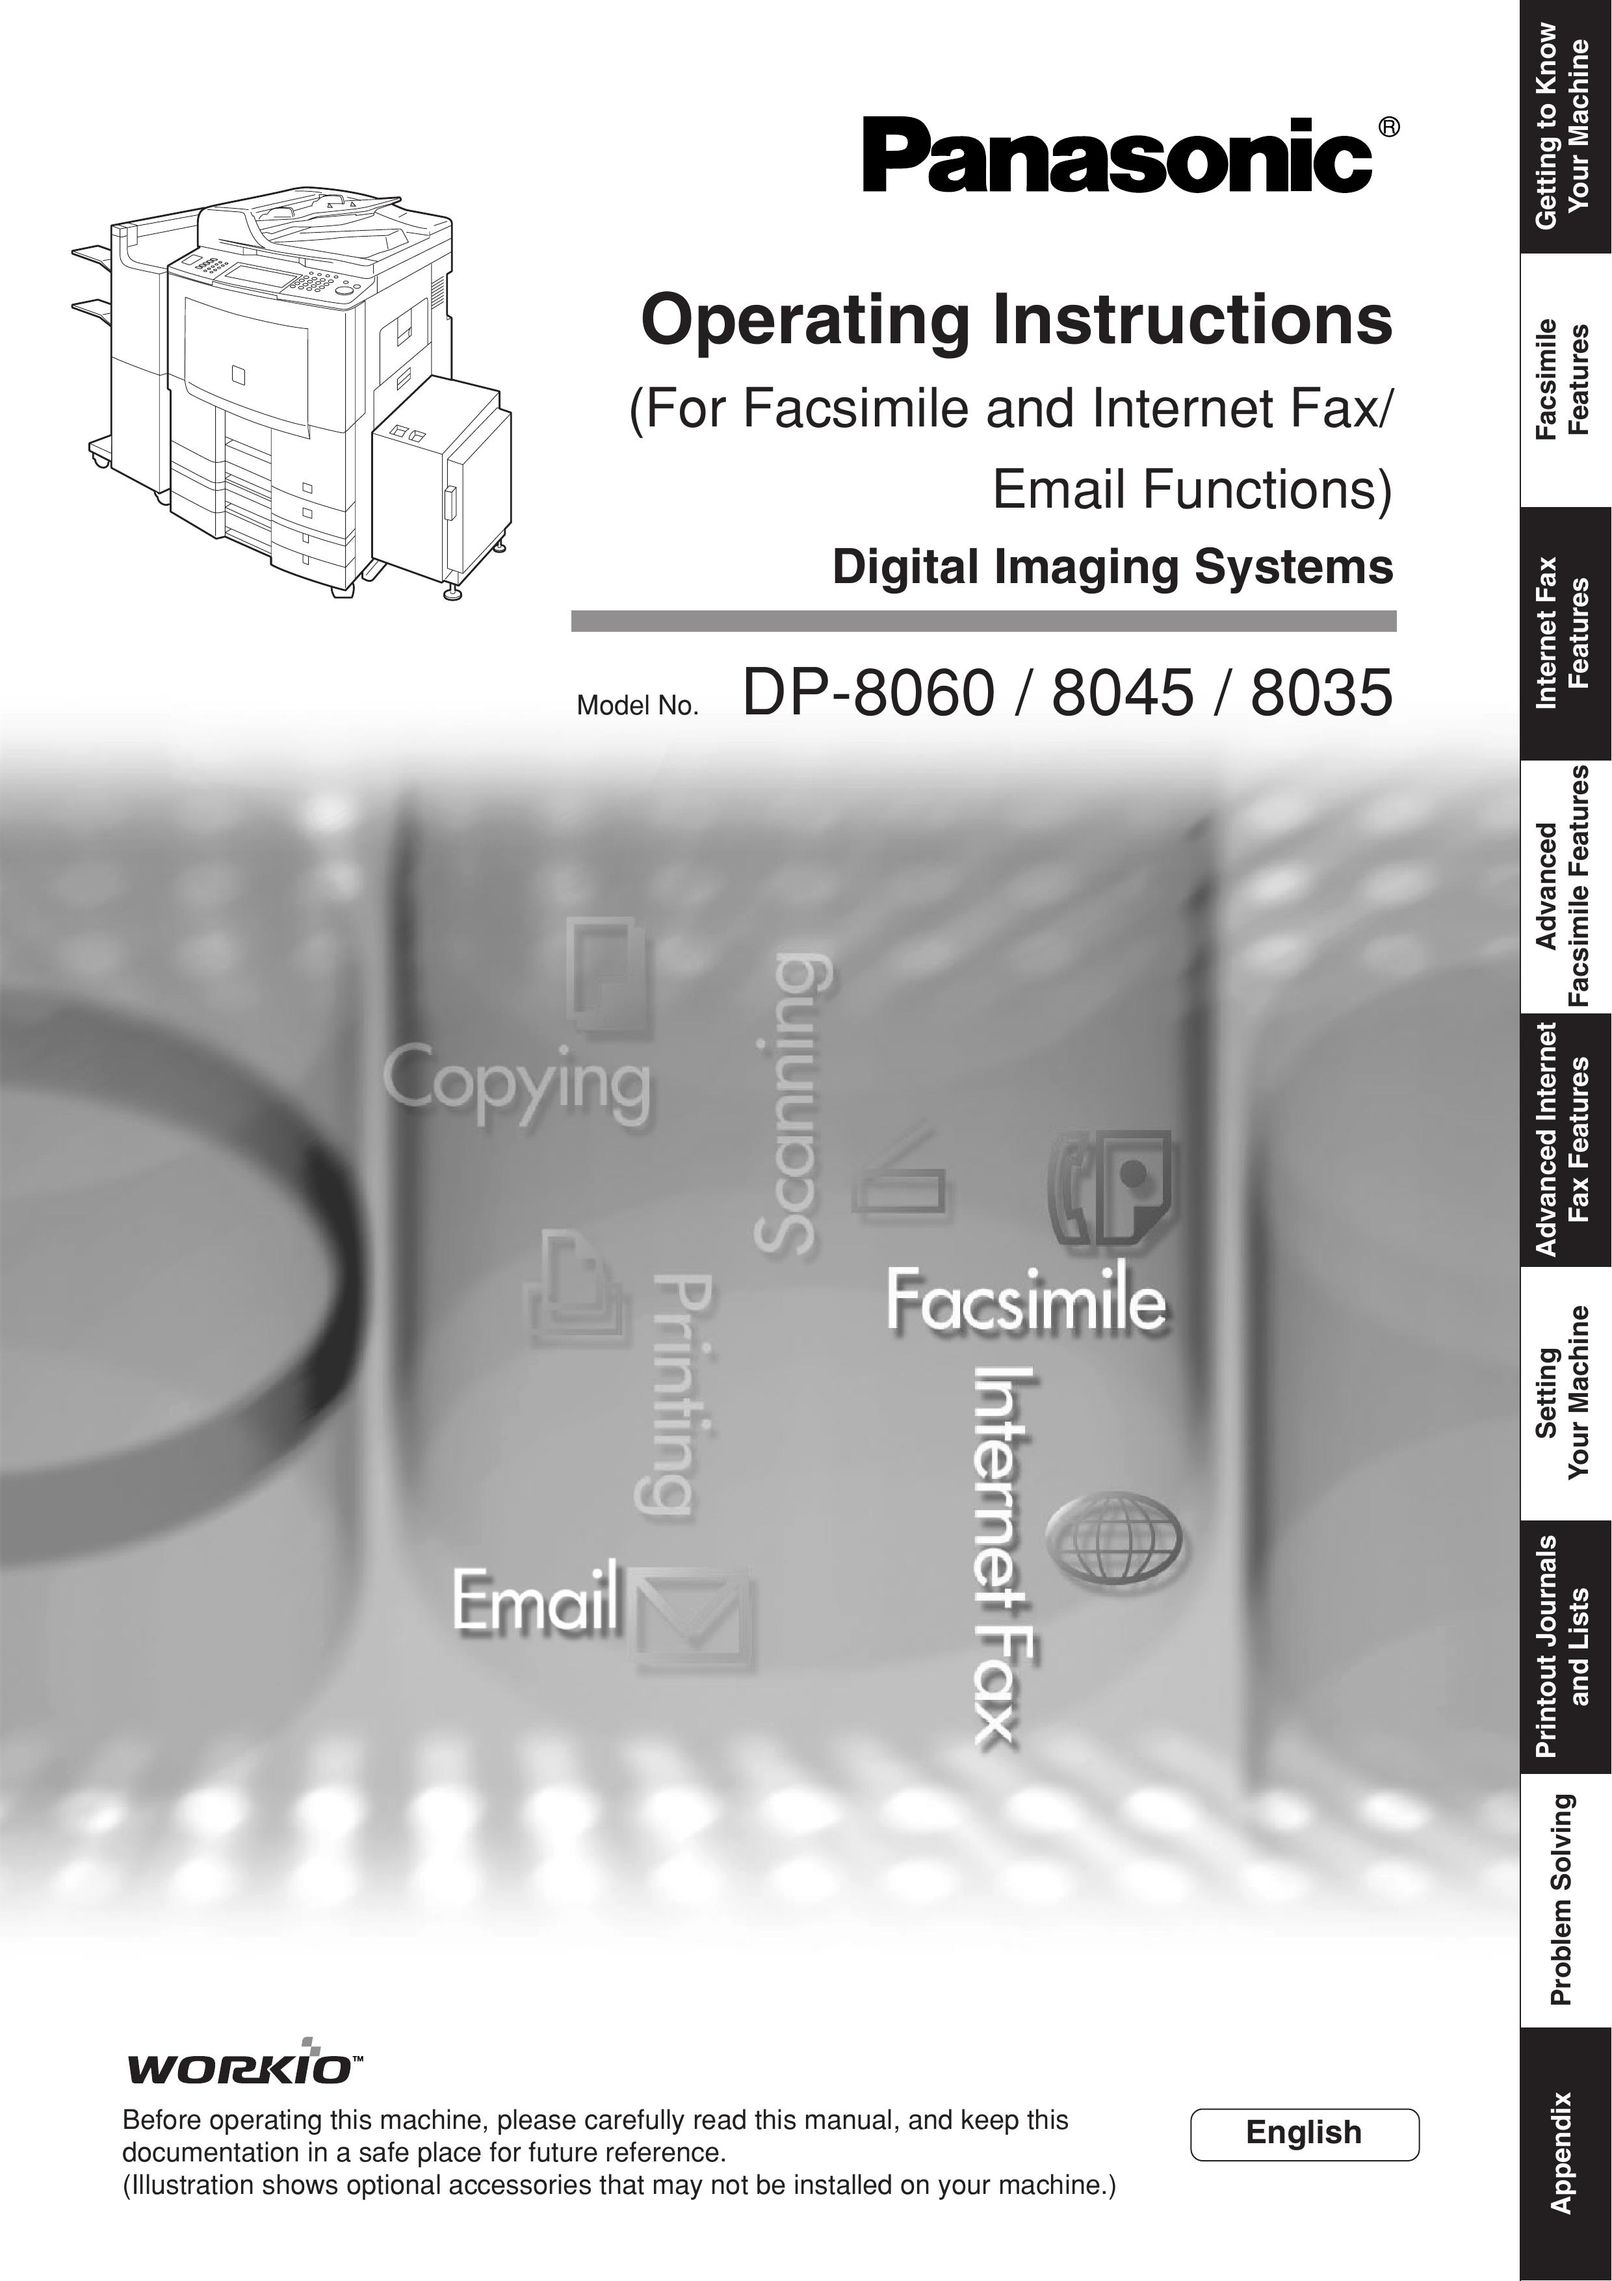 Panasonic 8035 Fax Machine User Manual